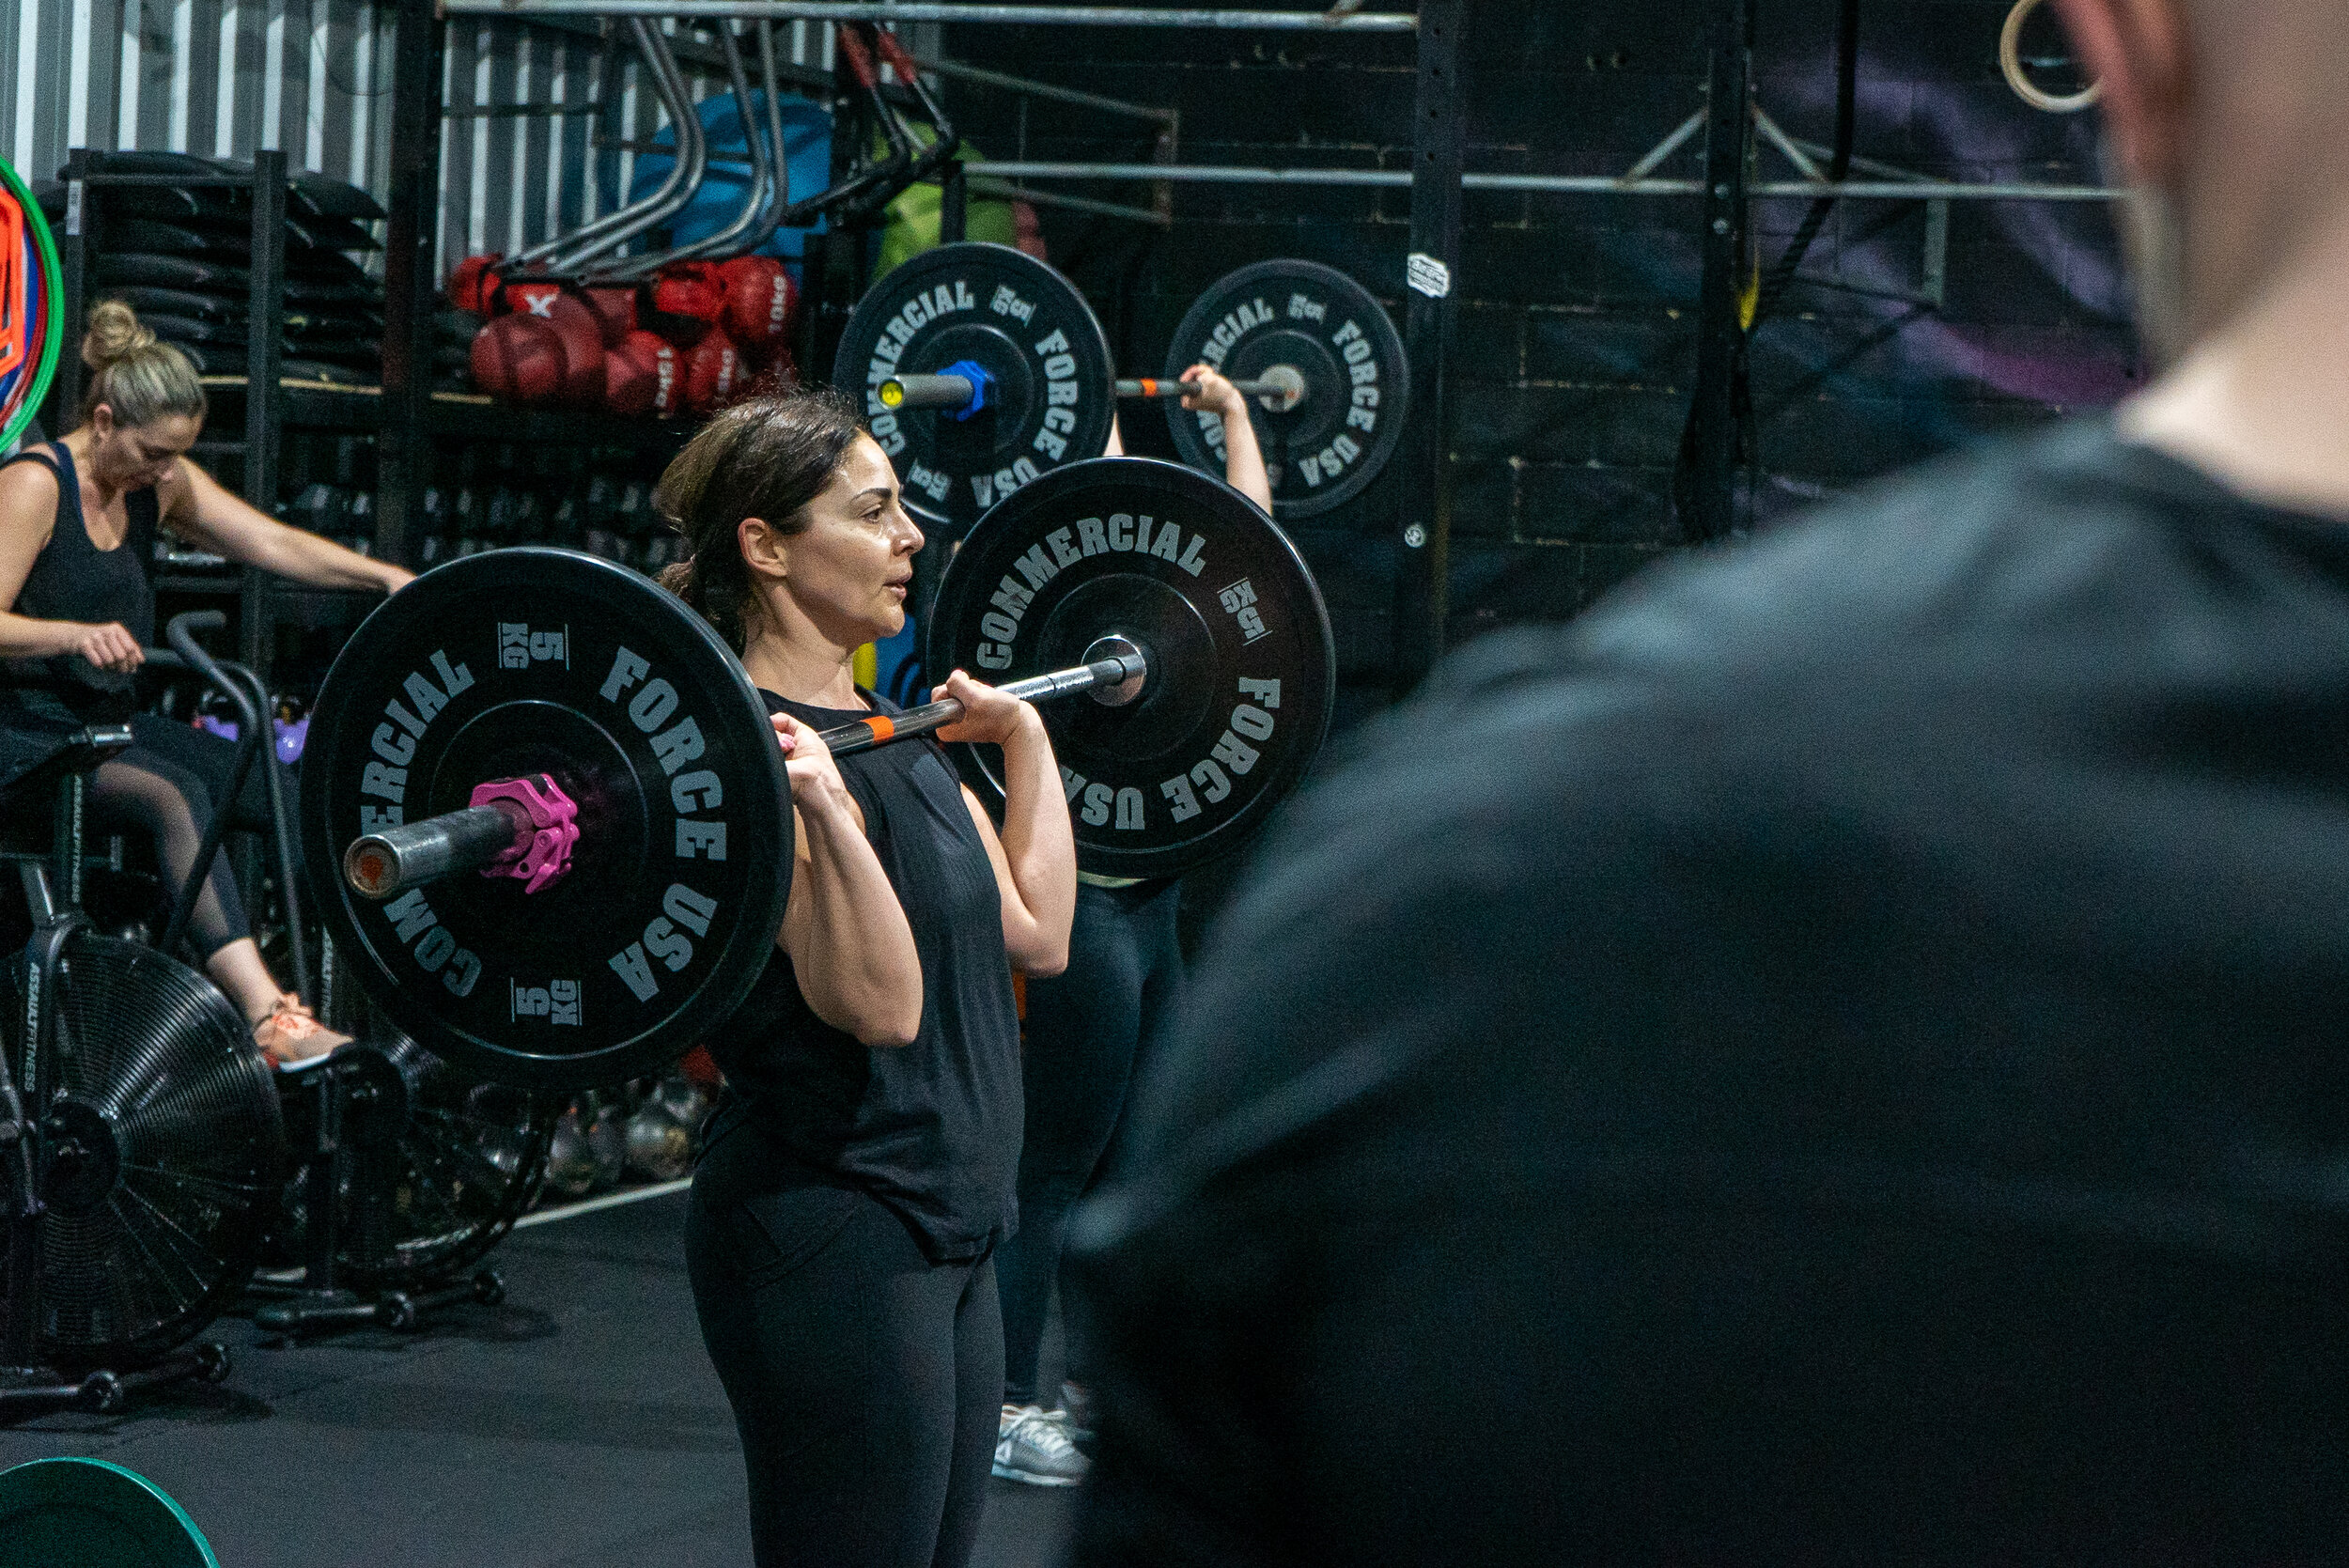 Women benefit from strength training